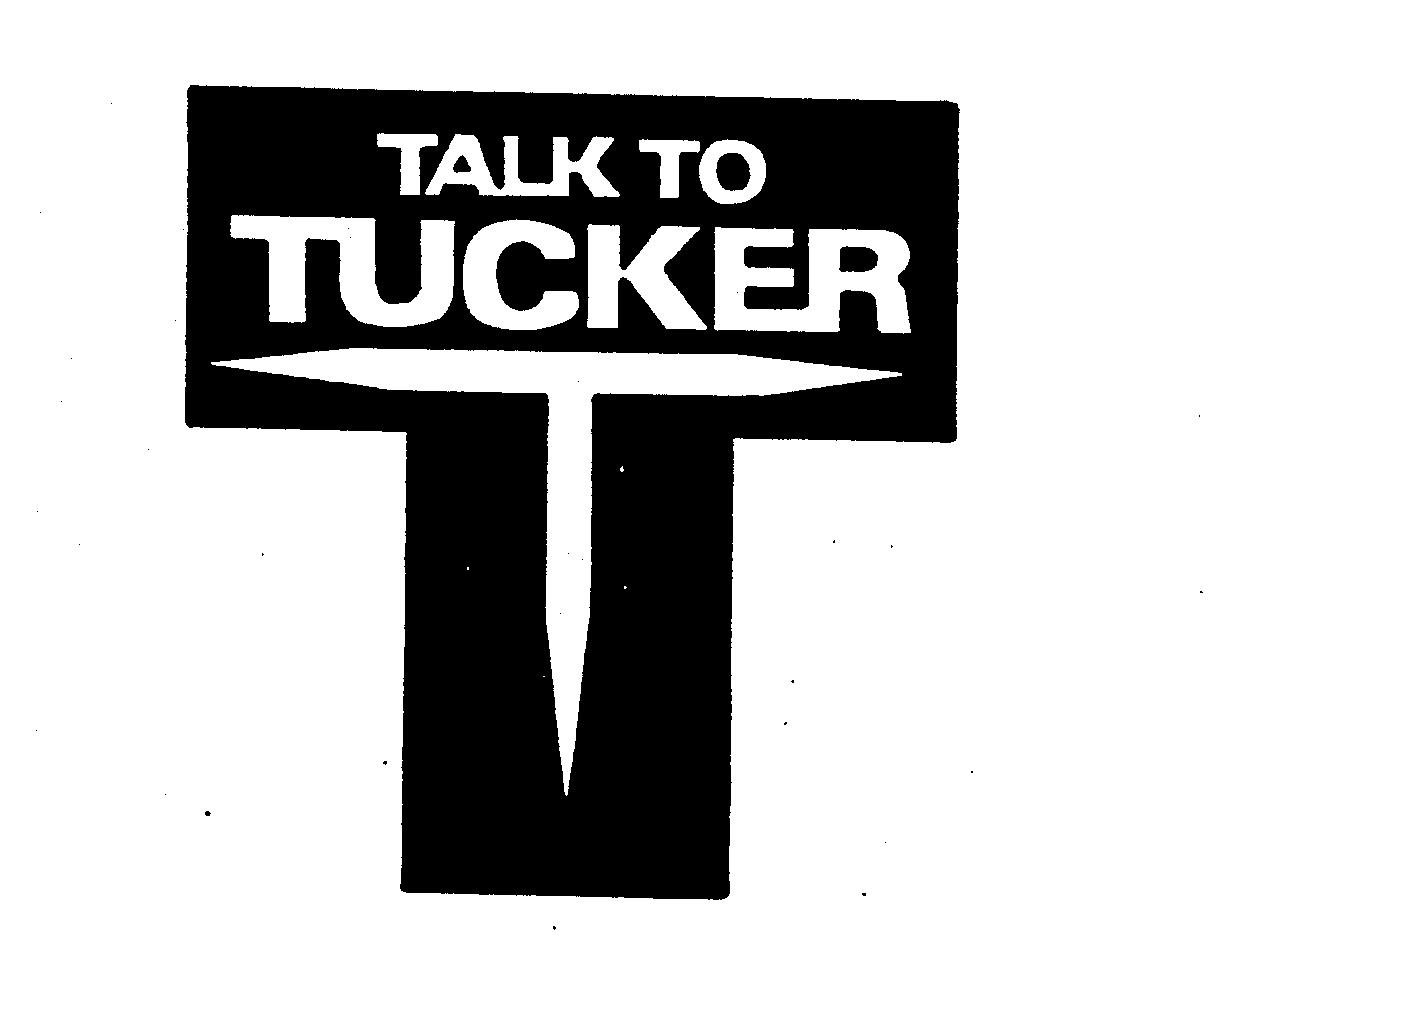  TALK TO TUCKER